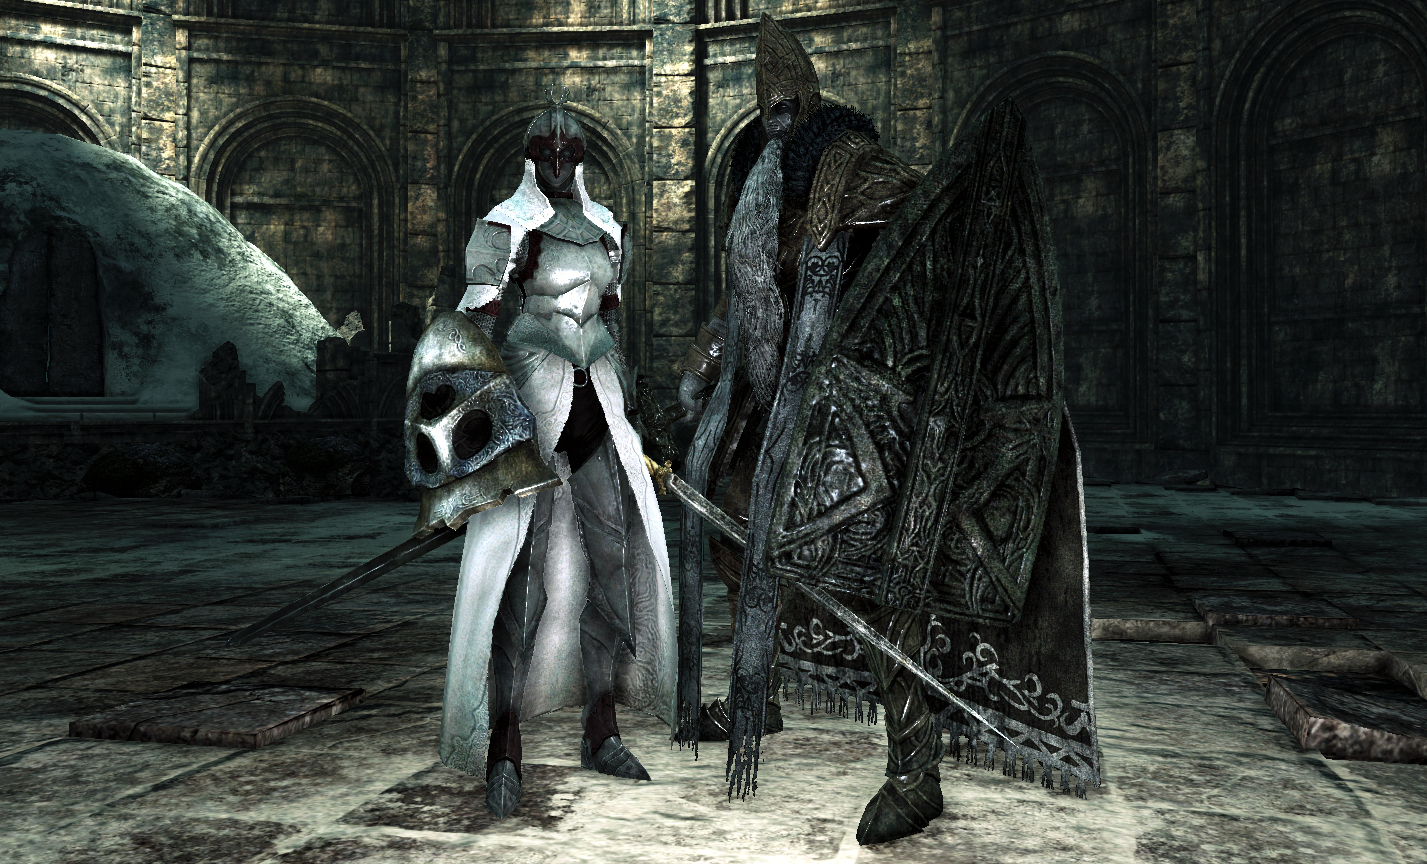 Dark Souls 2 Most Powerful Bosses, Ranked